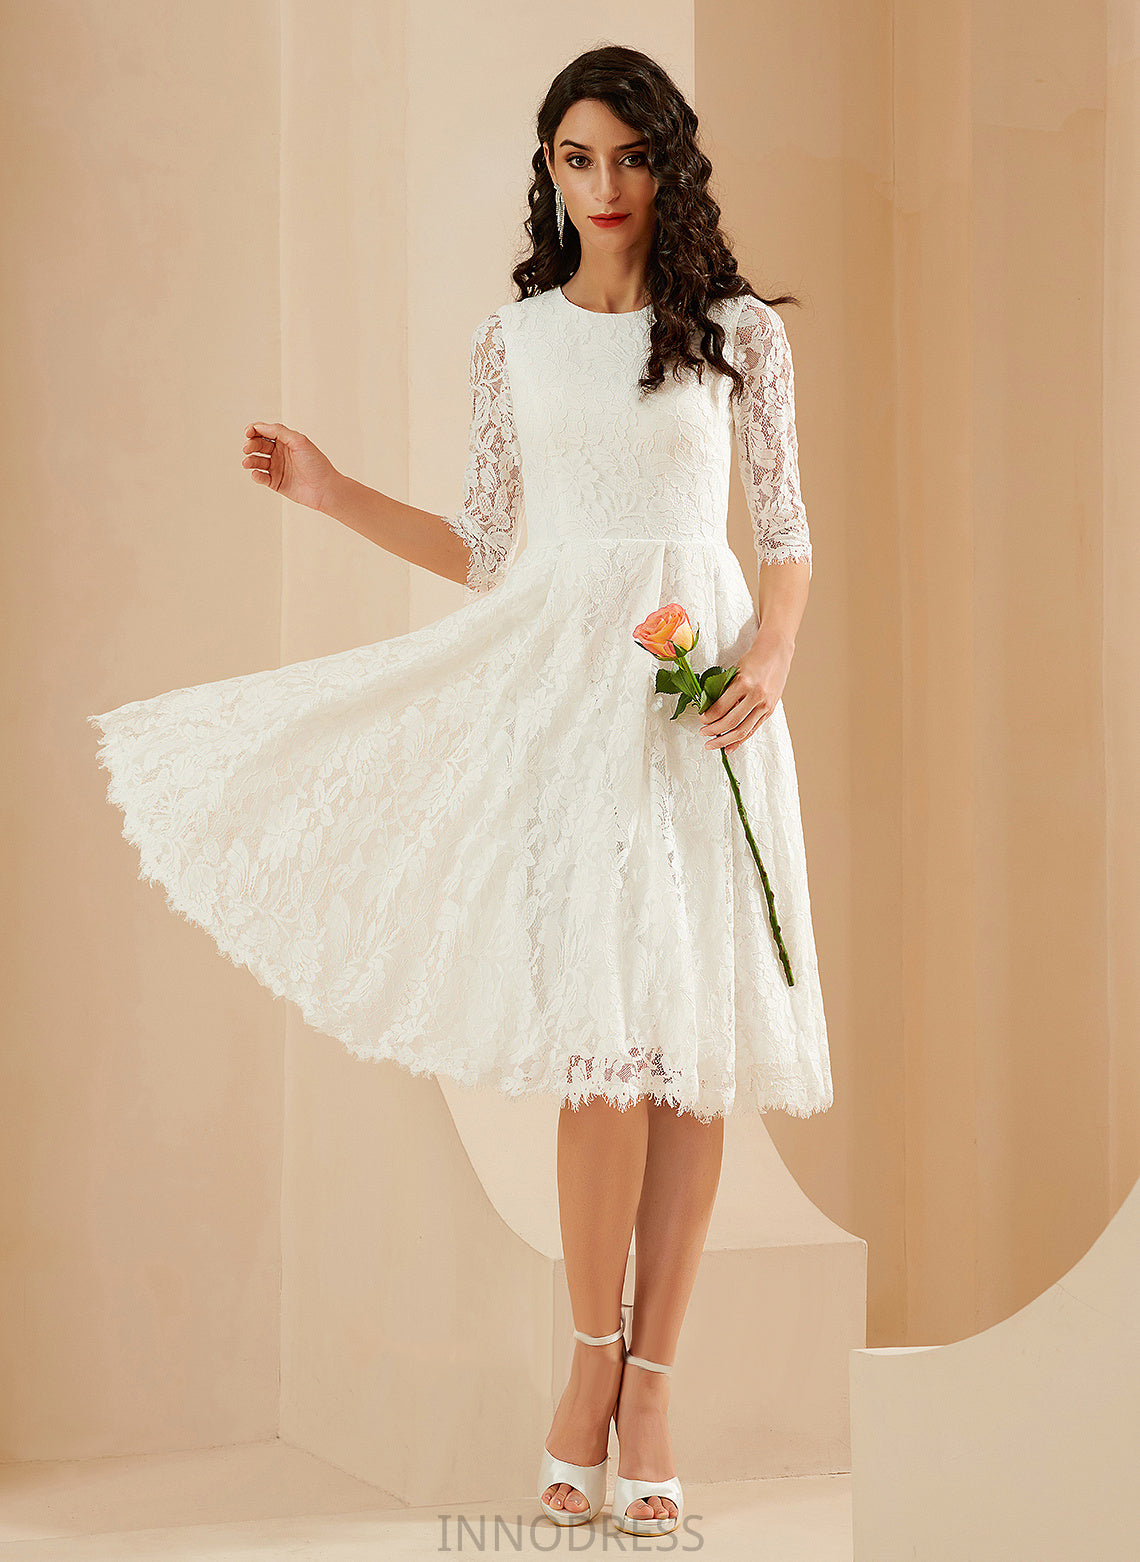 A-Line Dress Wedding Lace Neck Scoop Wedding Dresses Knee-Length Harriet